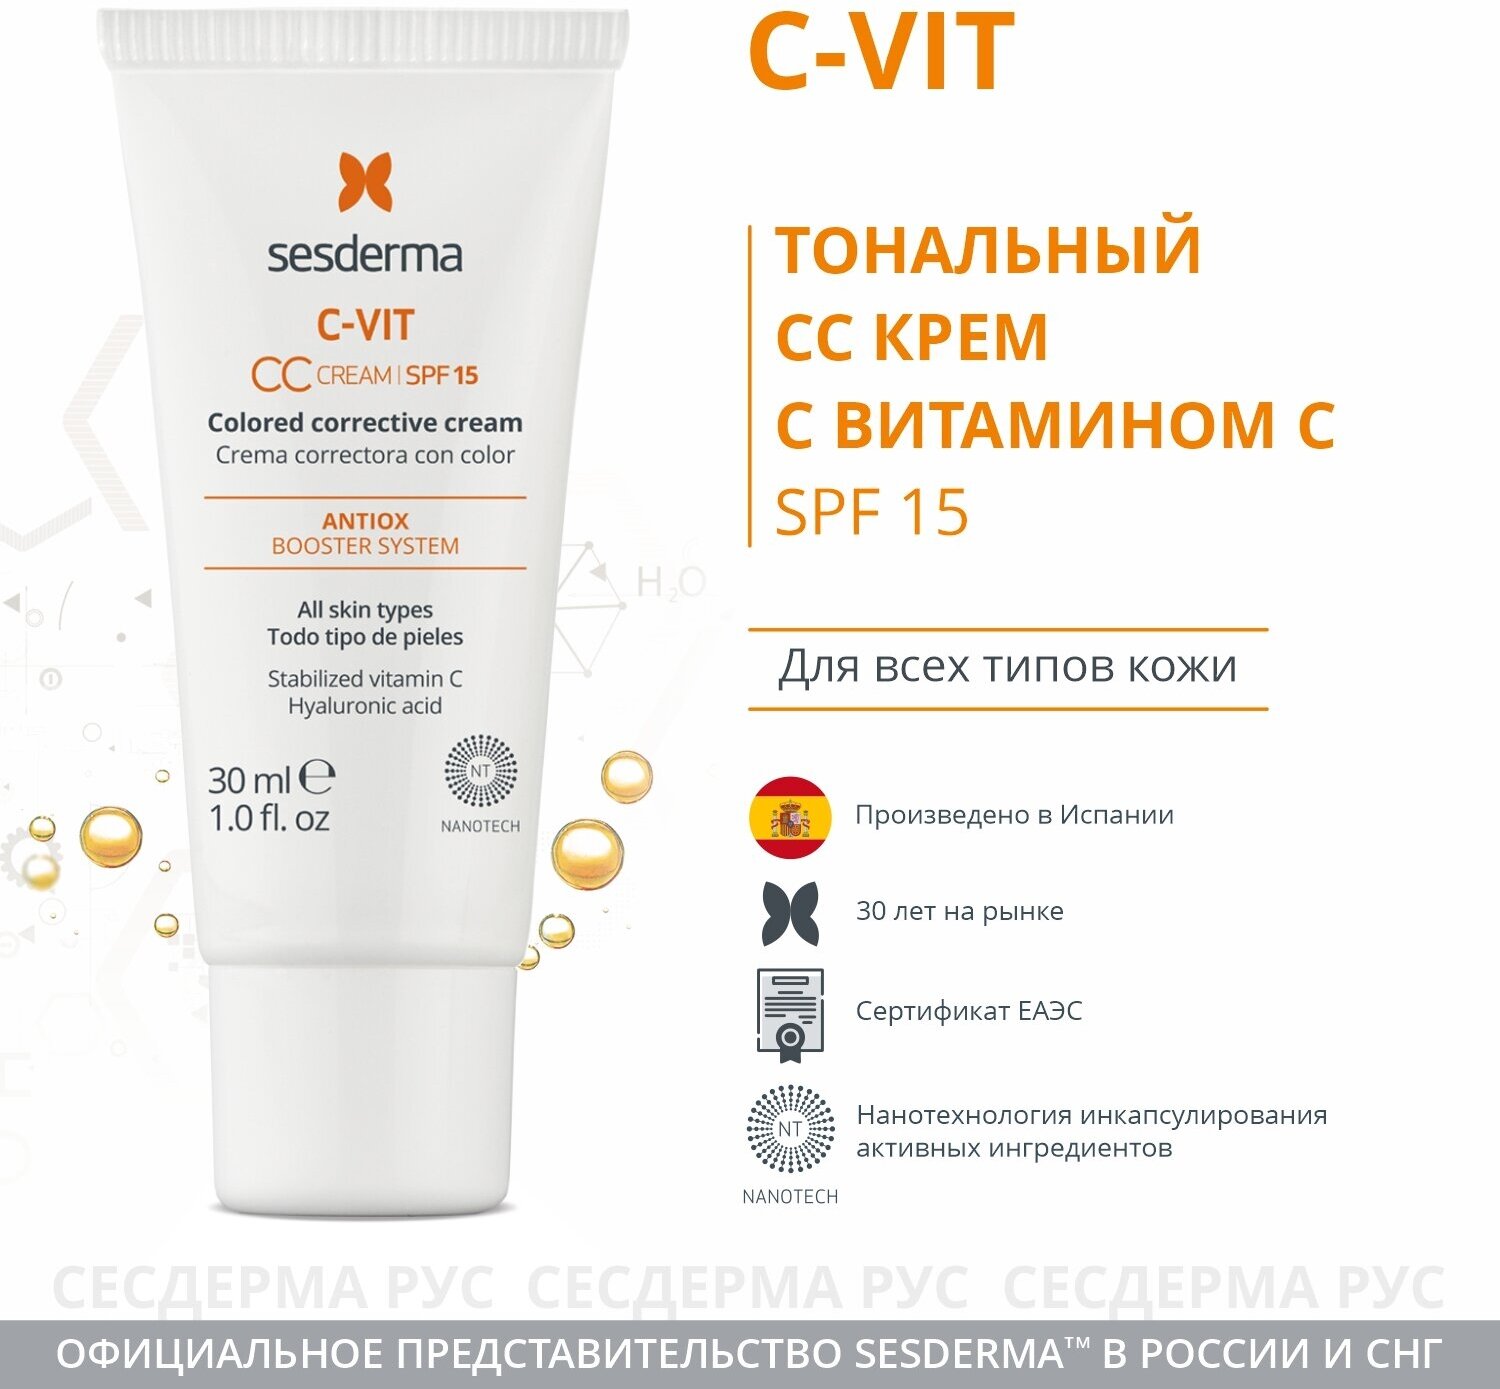 CC Крем SESDERMA C-VIT корректирующий тон кожи СЗФ 15 с витамином С, 30 мл